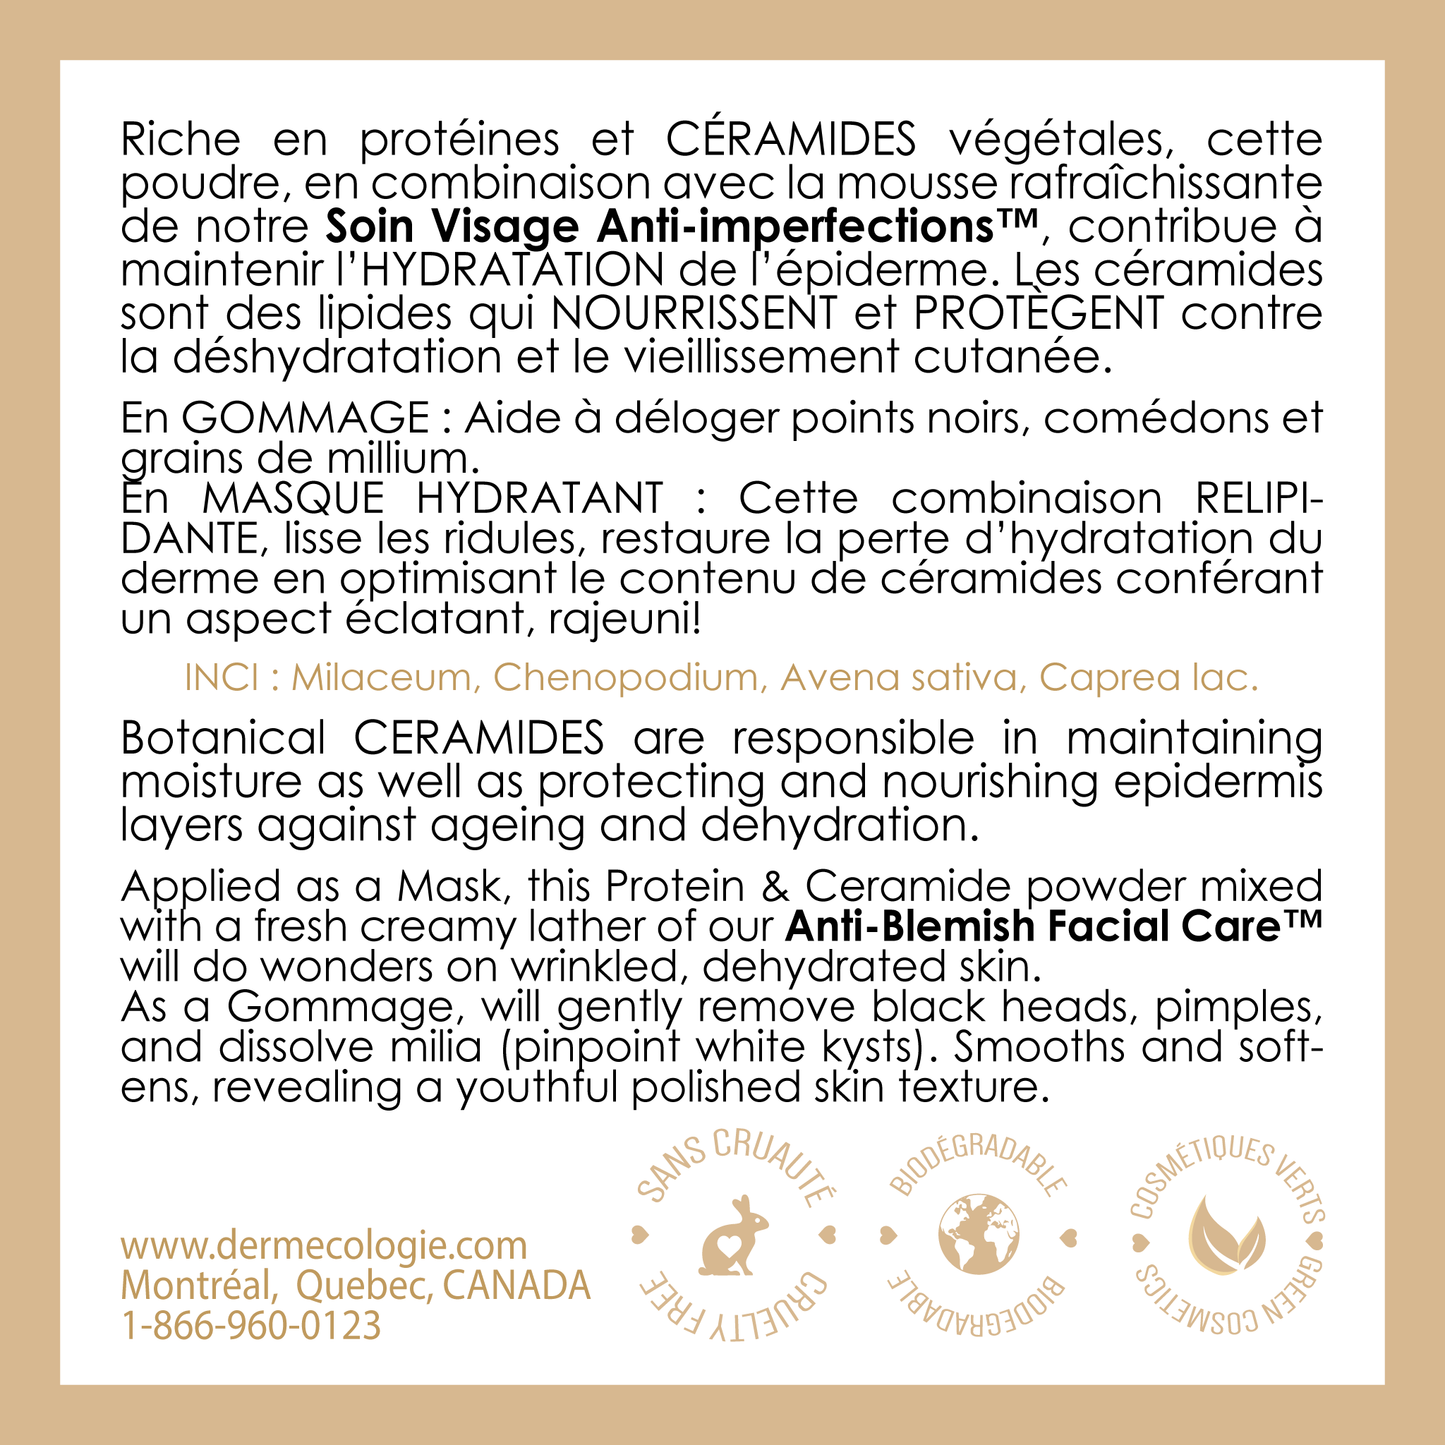 CERAMILLET™  Gommage et Masque Hydratant  1.4oz / 40g